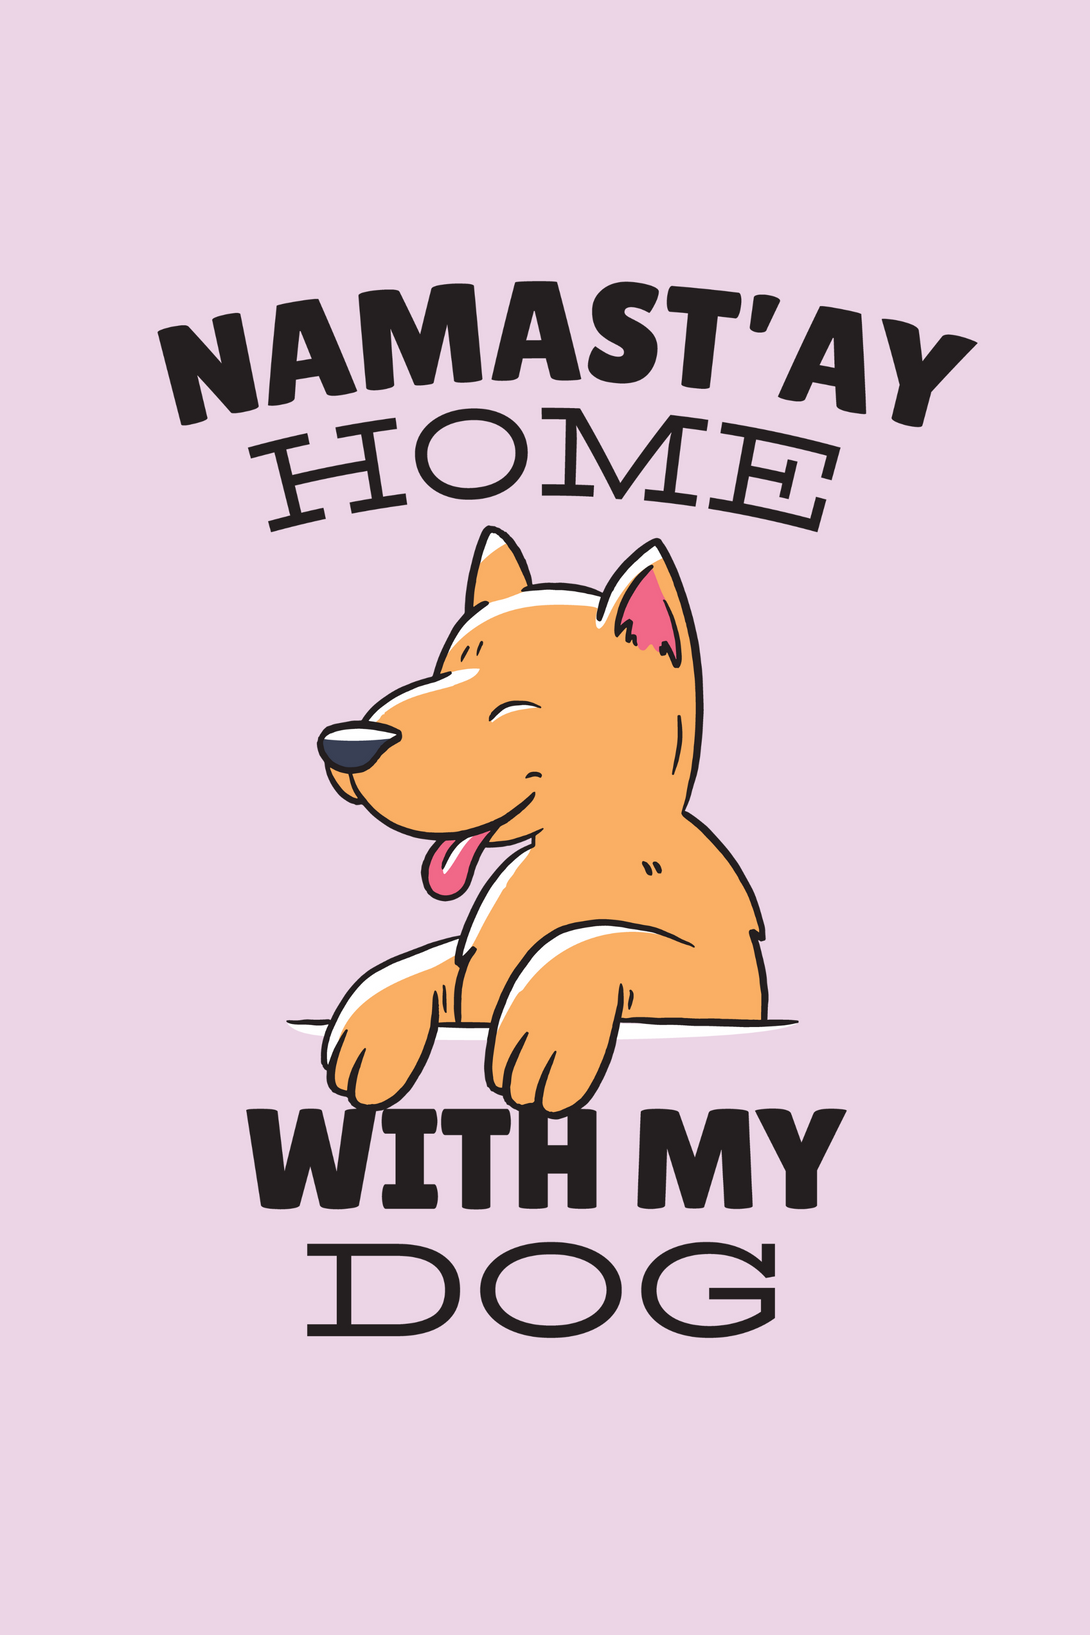 Namastay Home Dog Printed T-Shirt For Men - WowWaves - 1